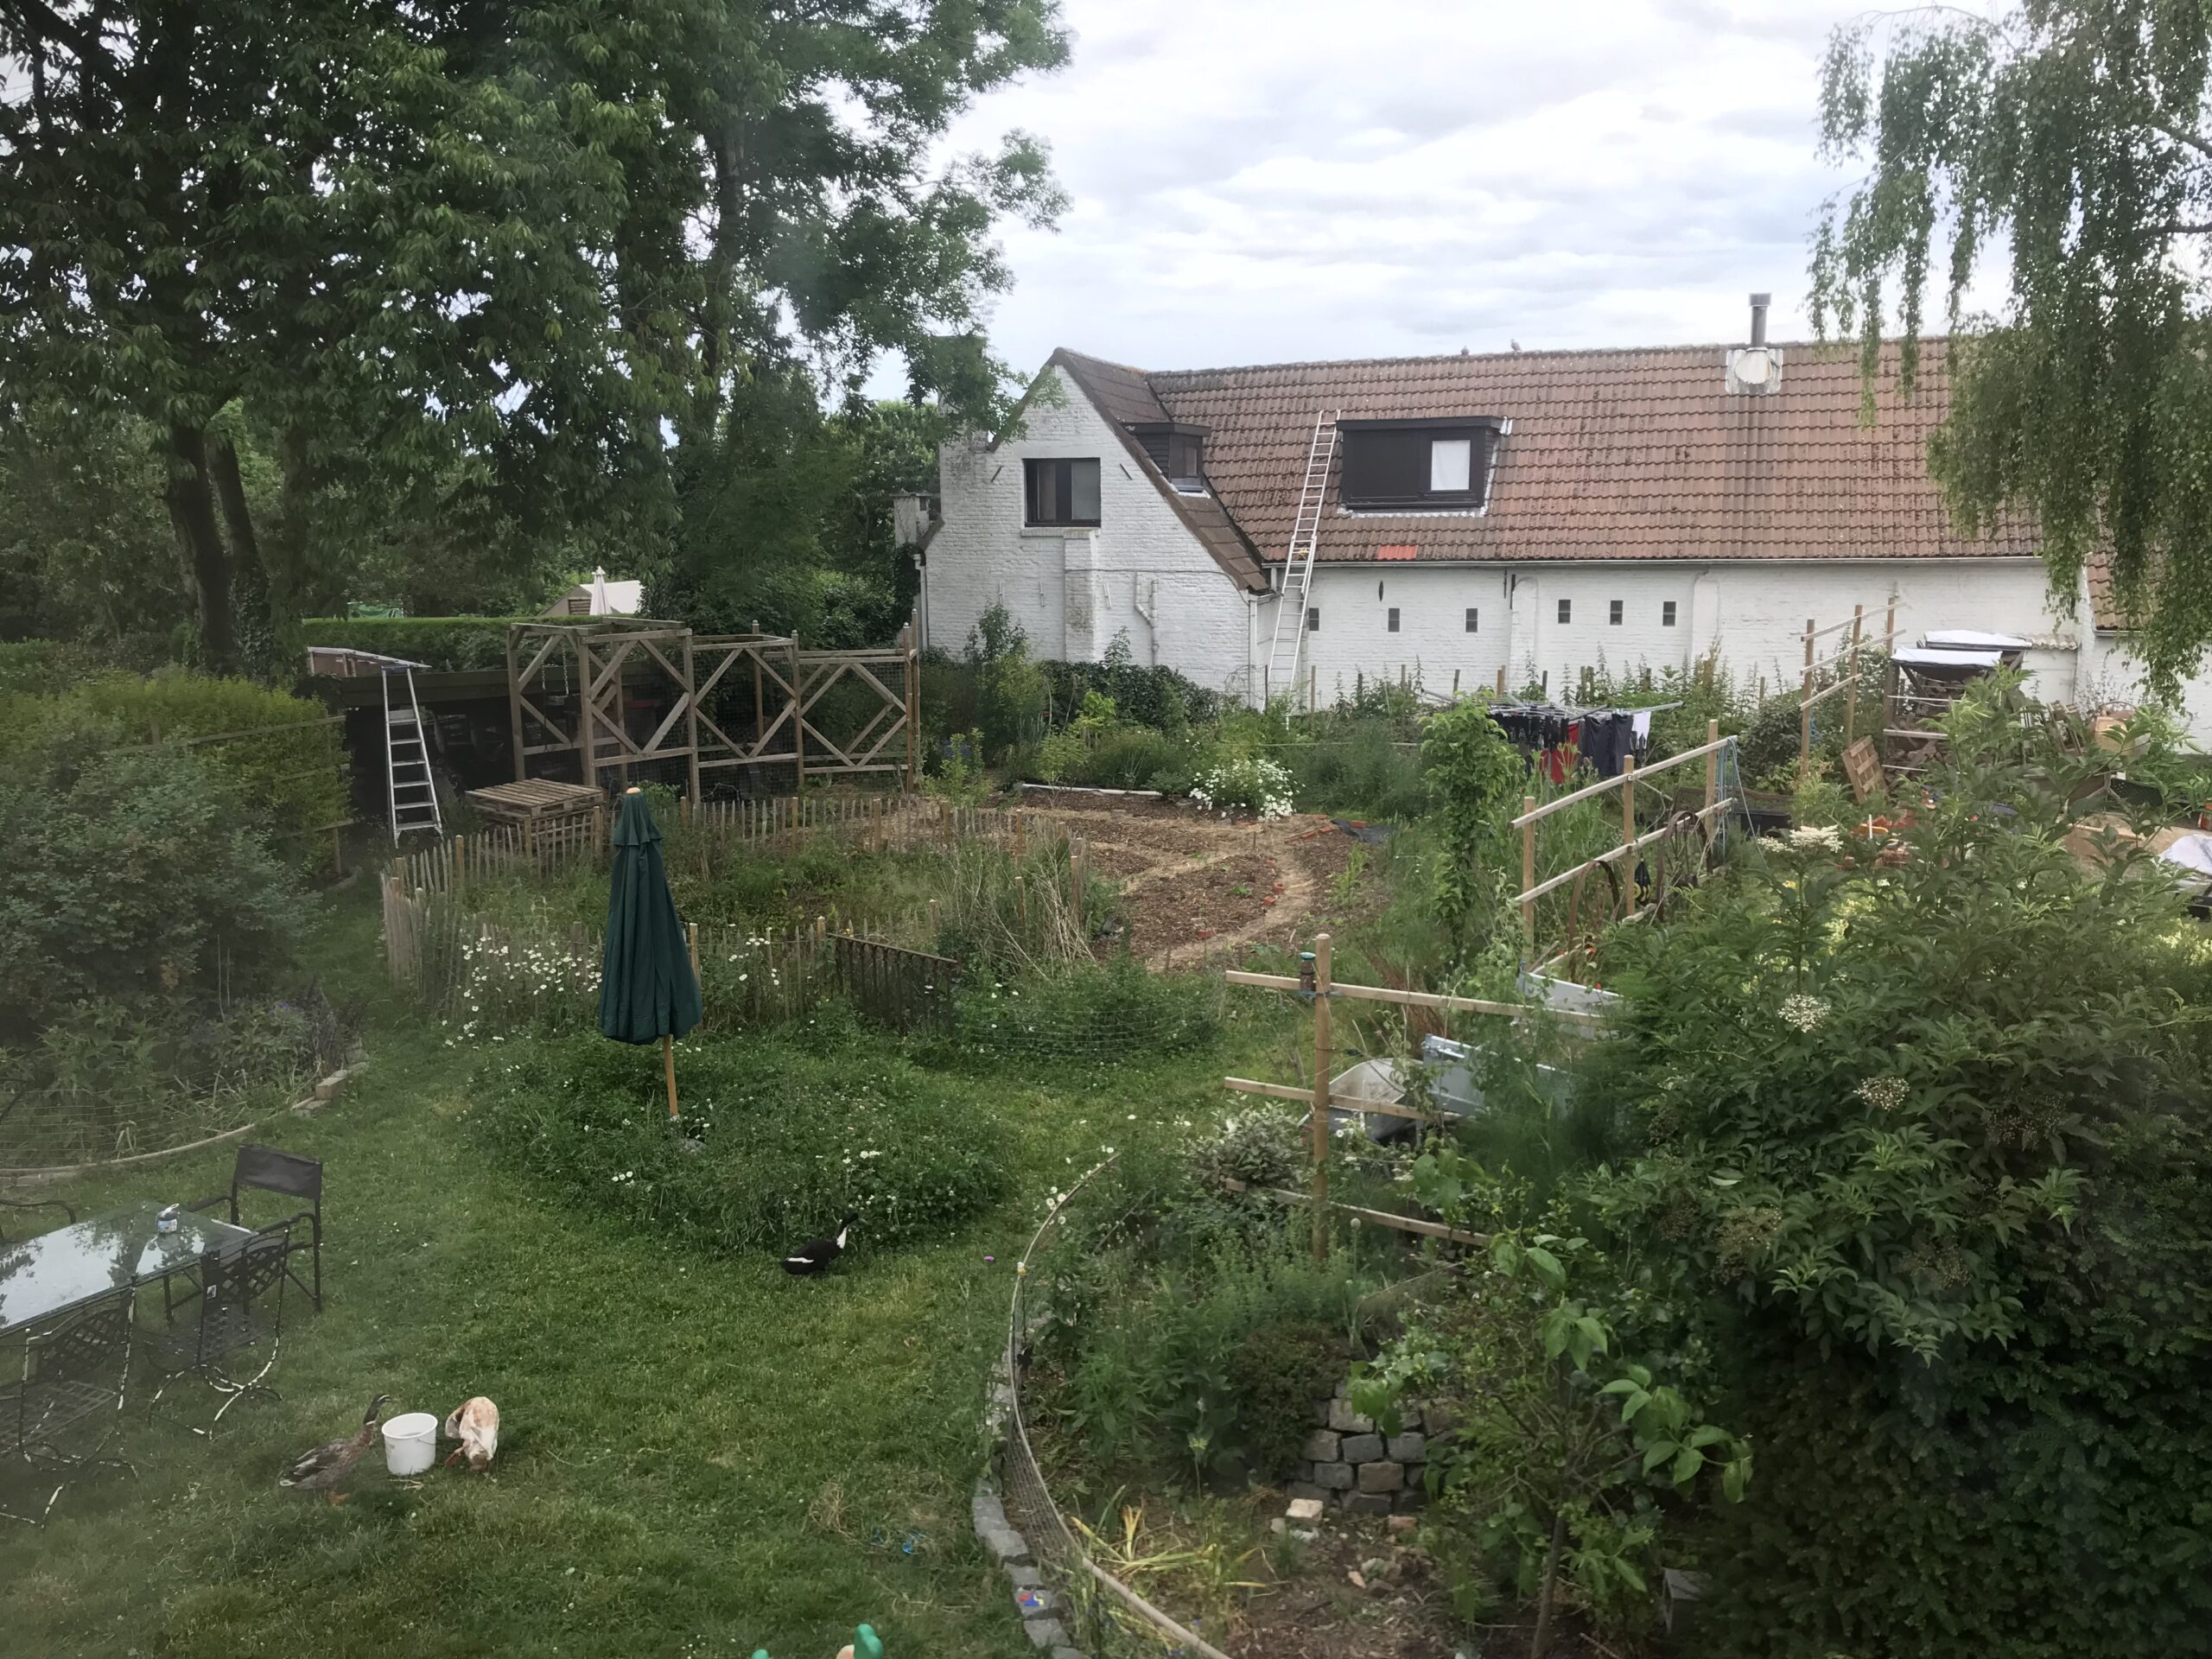 Visite du jardin en permaculture